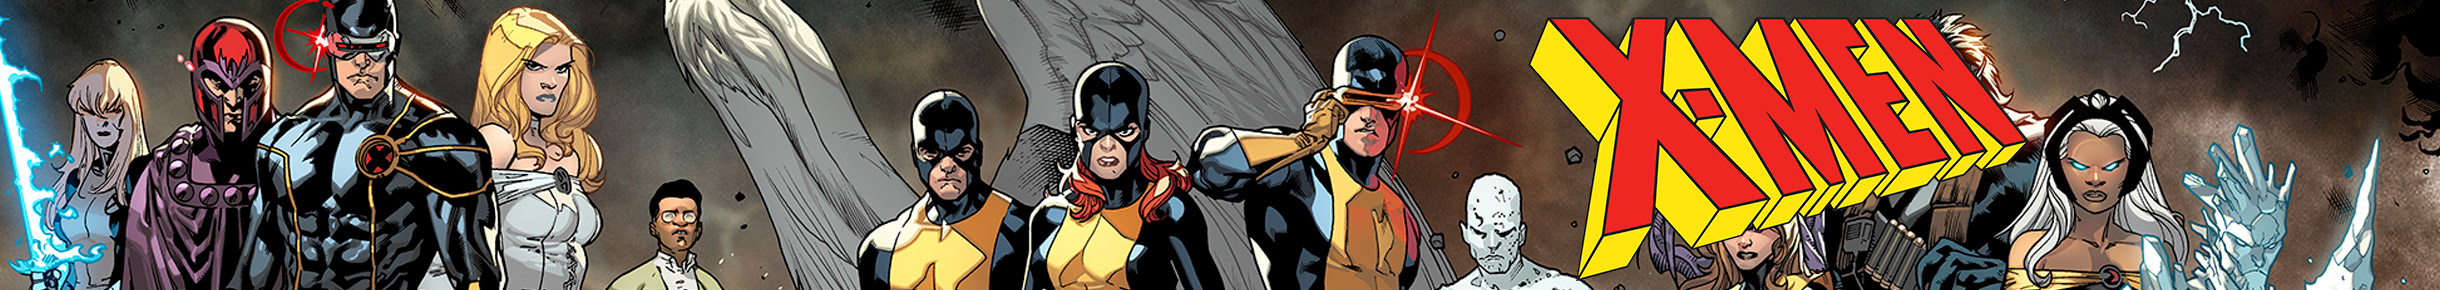 X-Men Accessories Banner